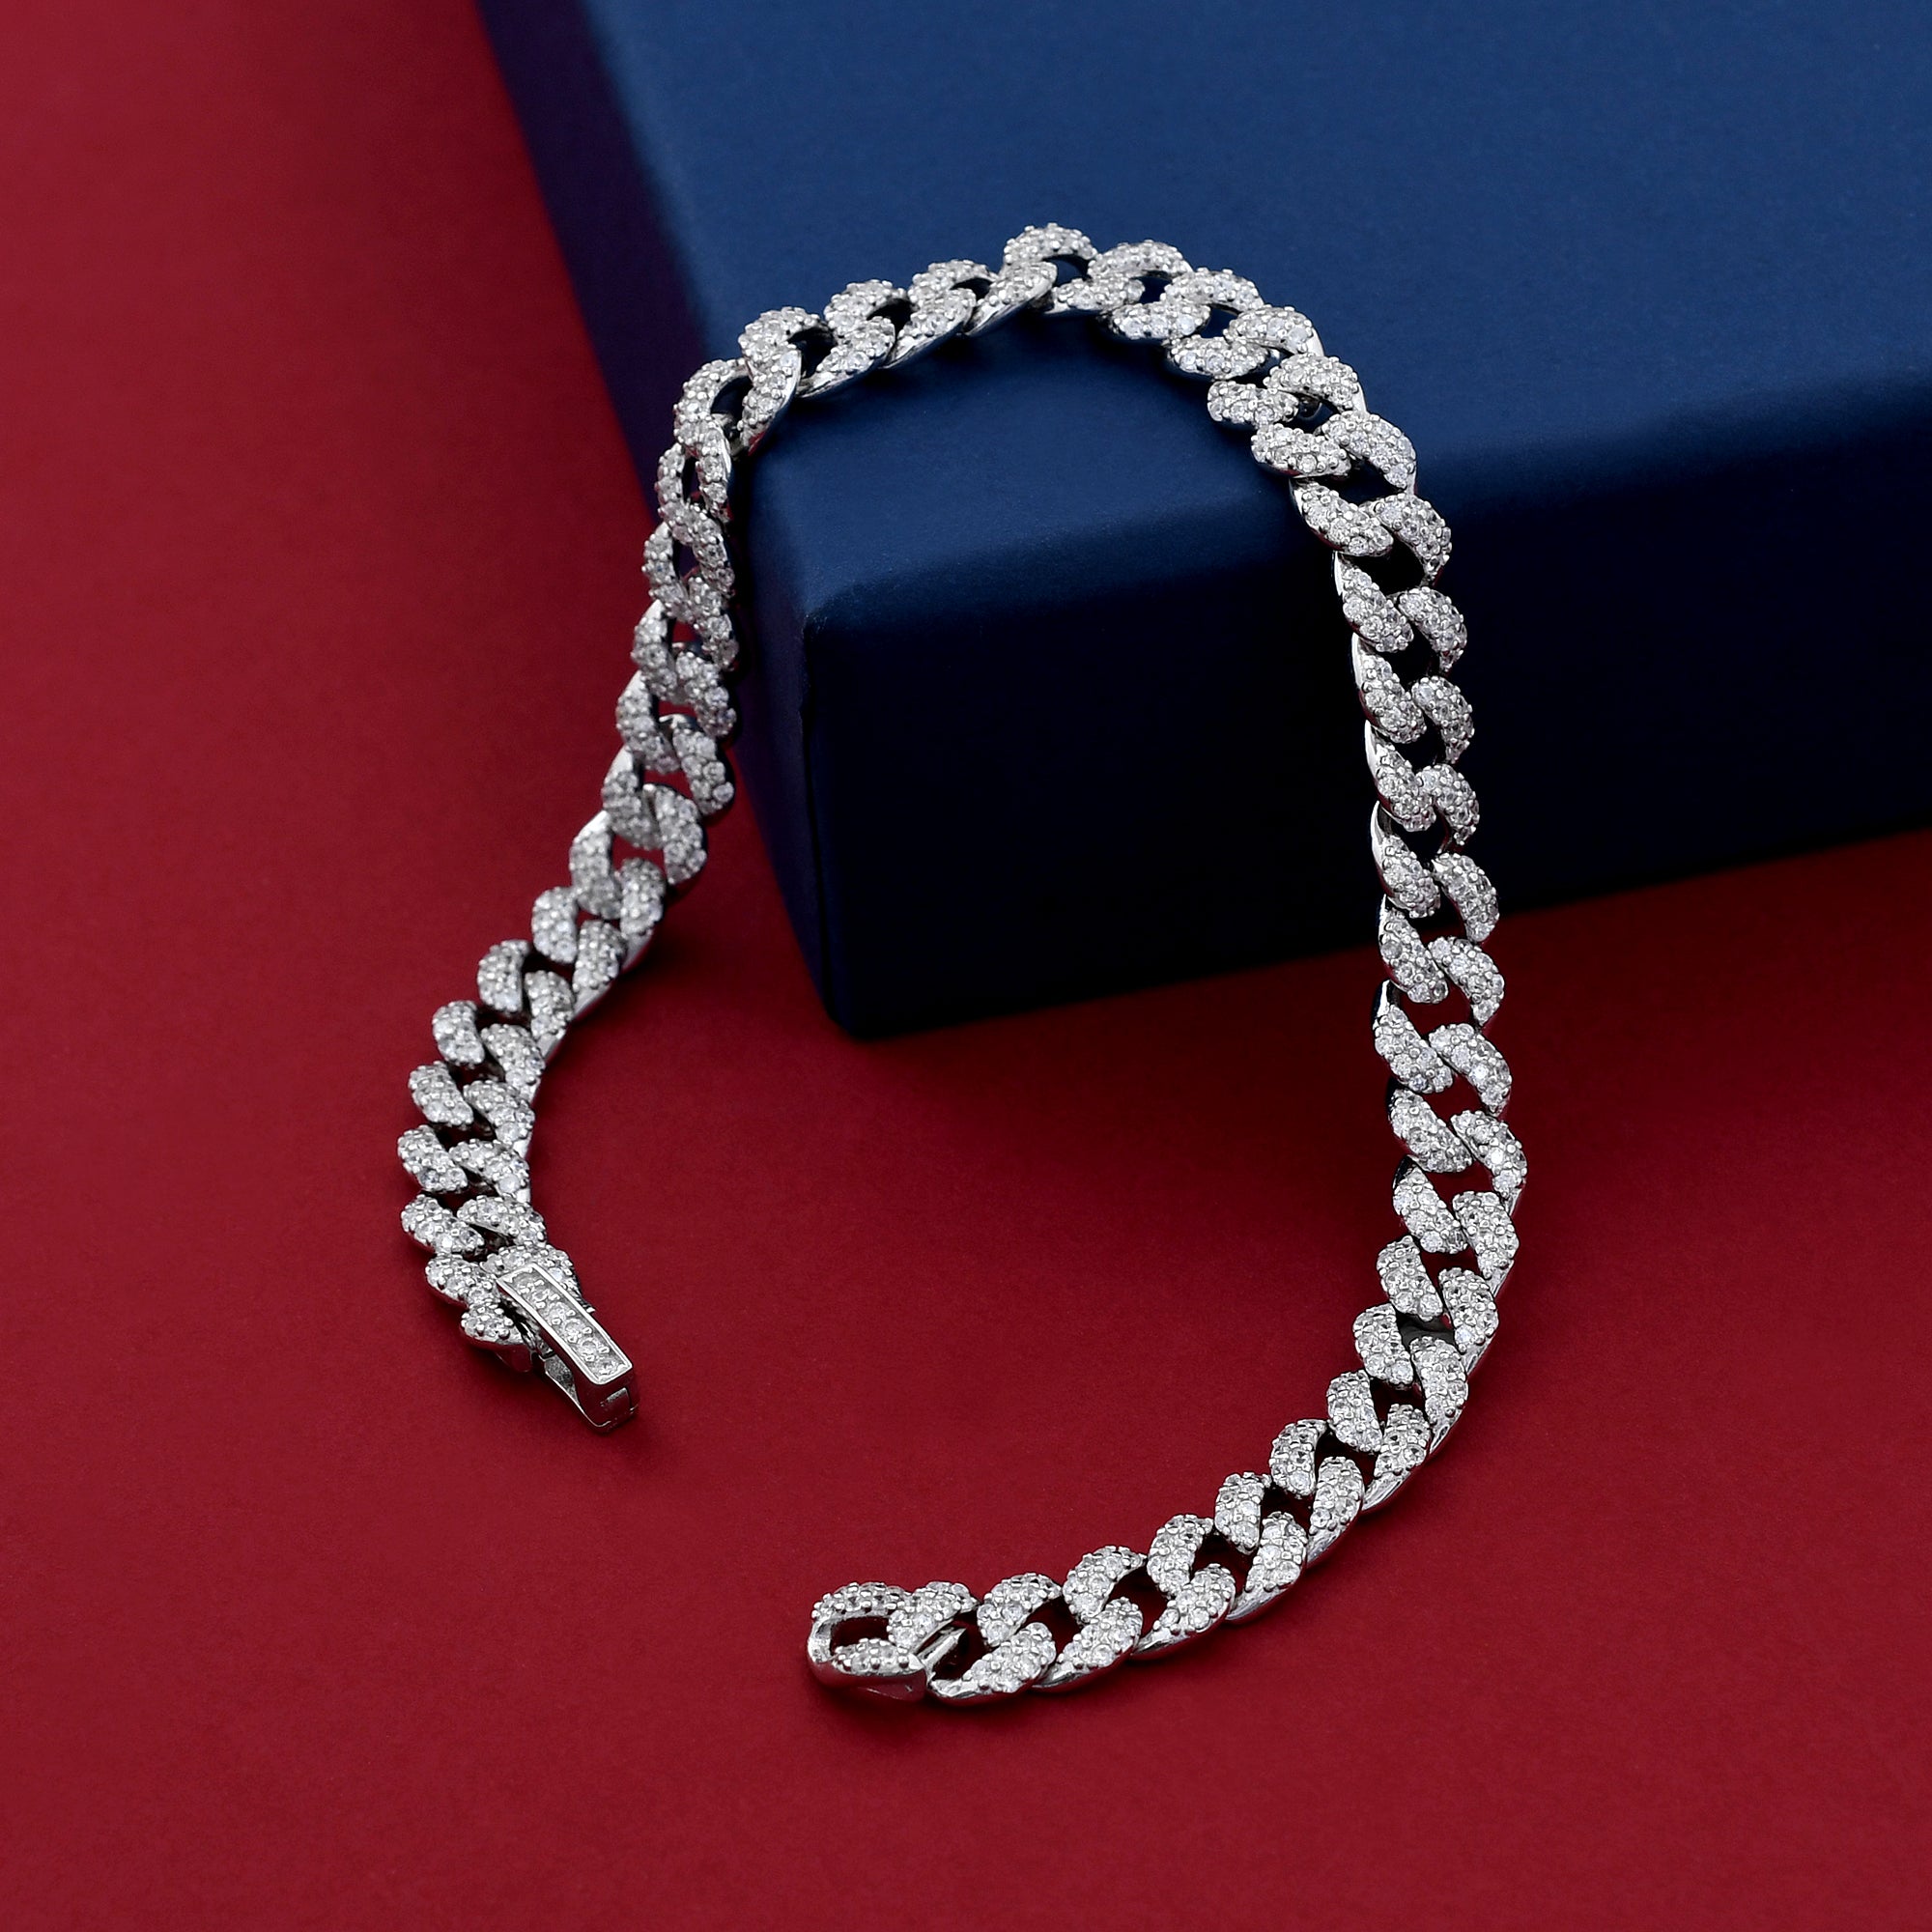 925 Sterling Silver Bracelet